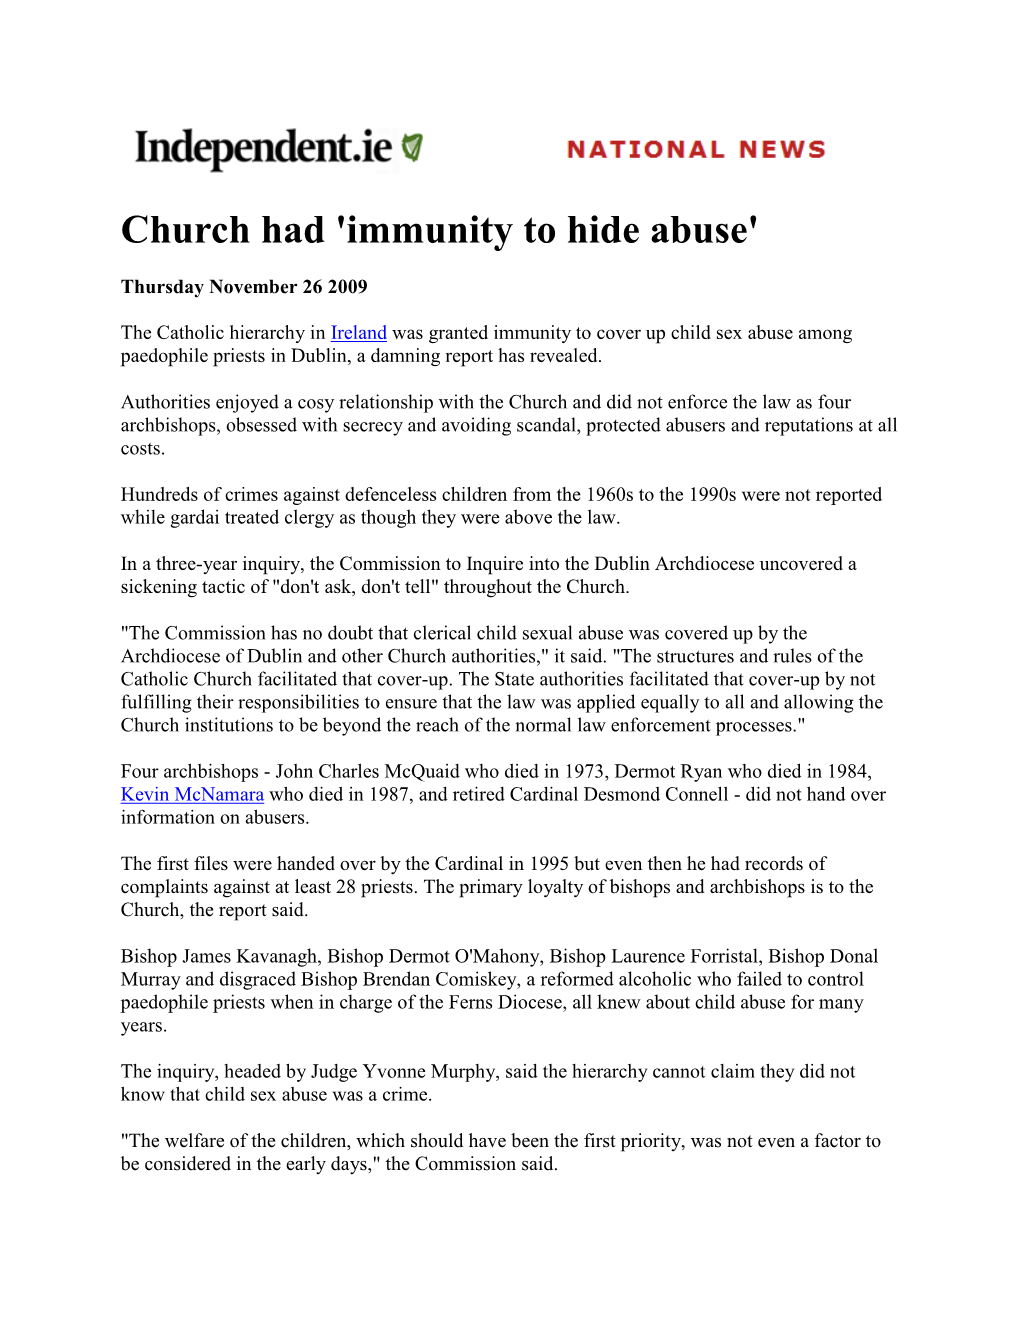 Church Had 'Immunity to Hide Abuse'